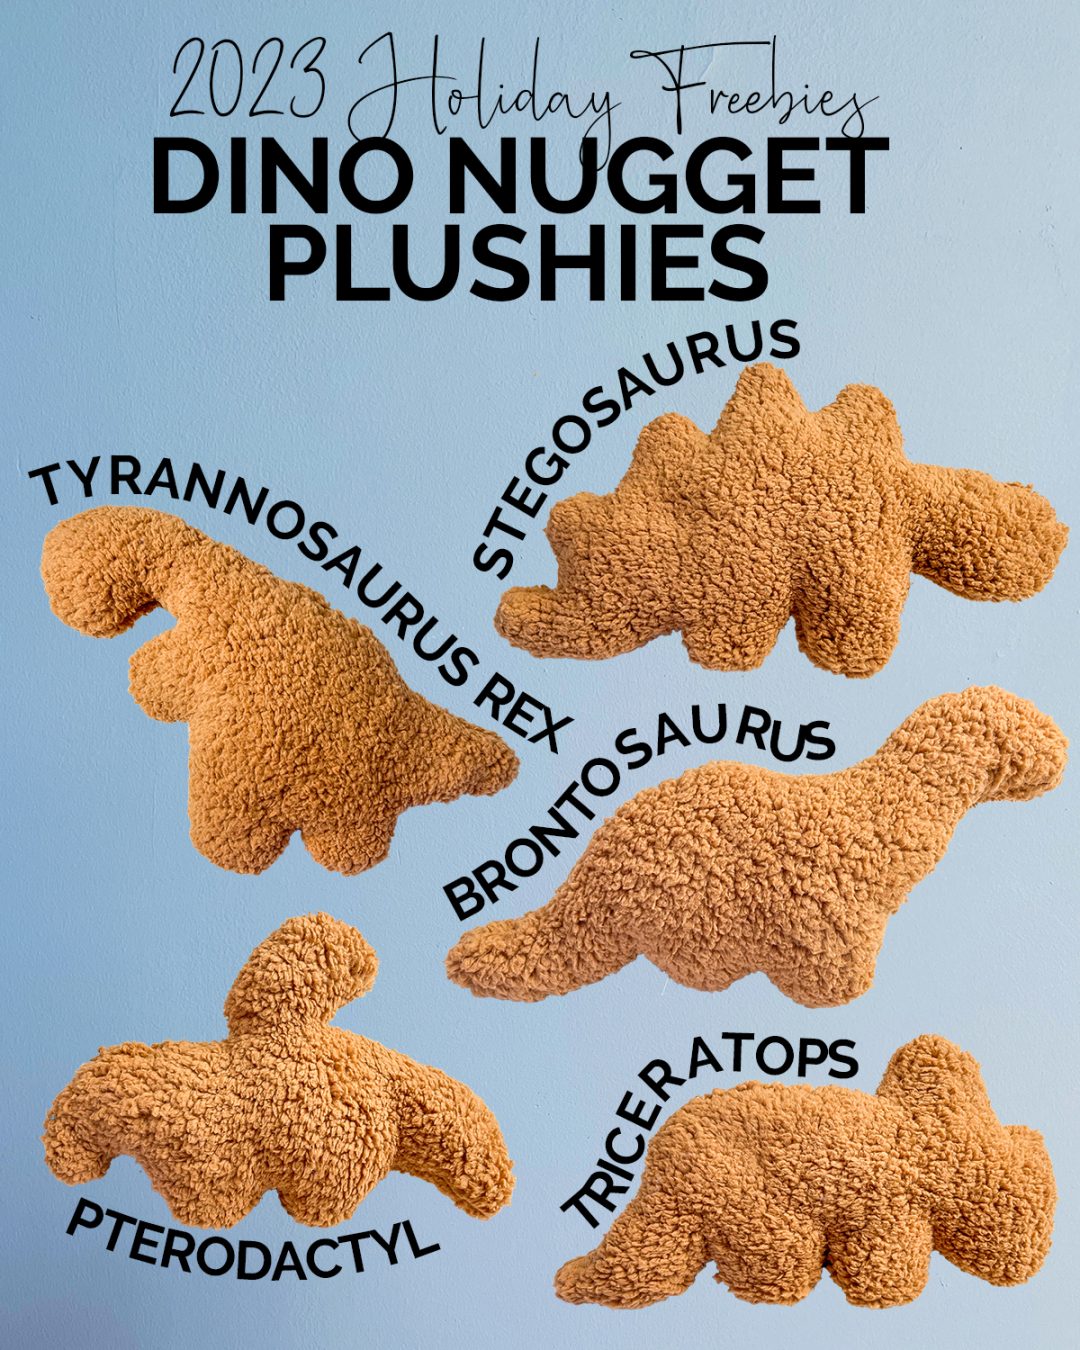 Dino Nugget Plushies / 2023 Holiday Freebies